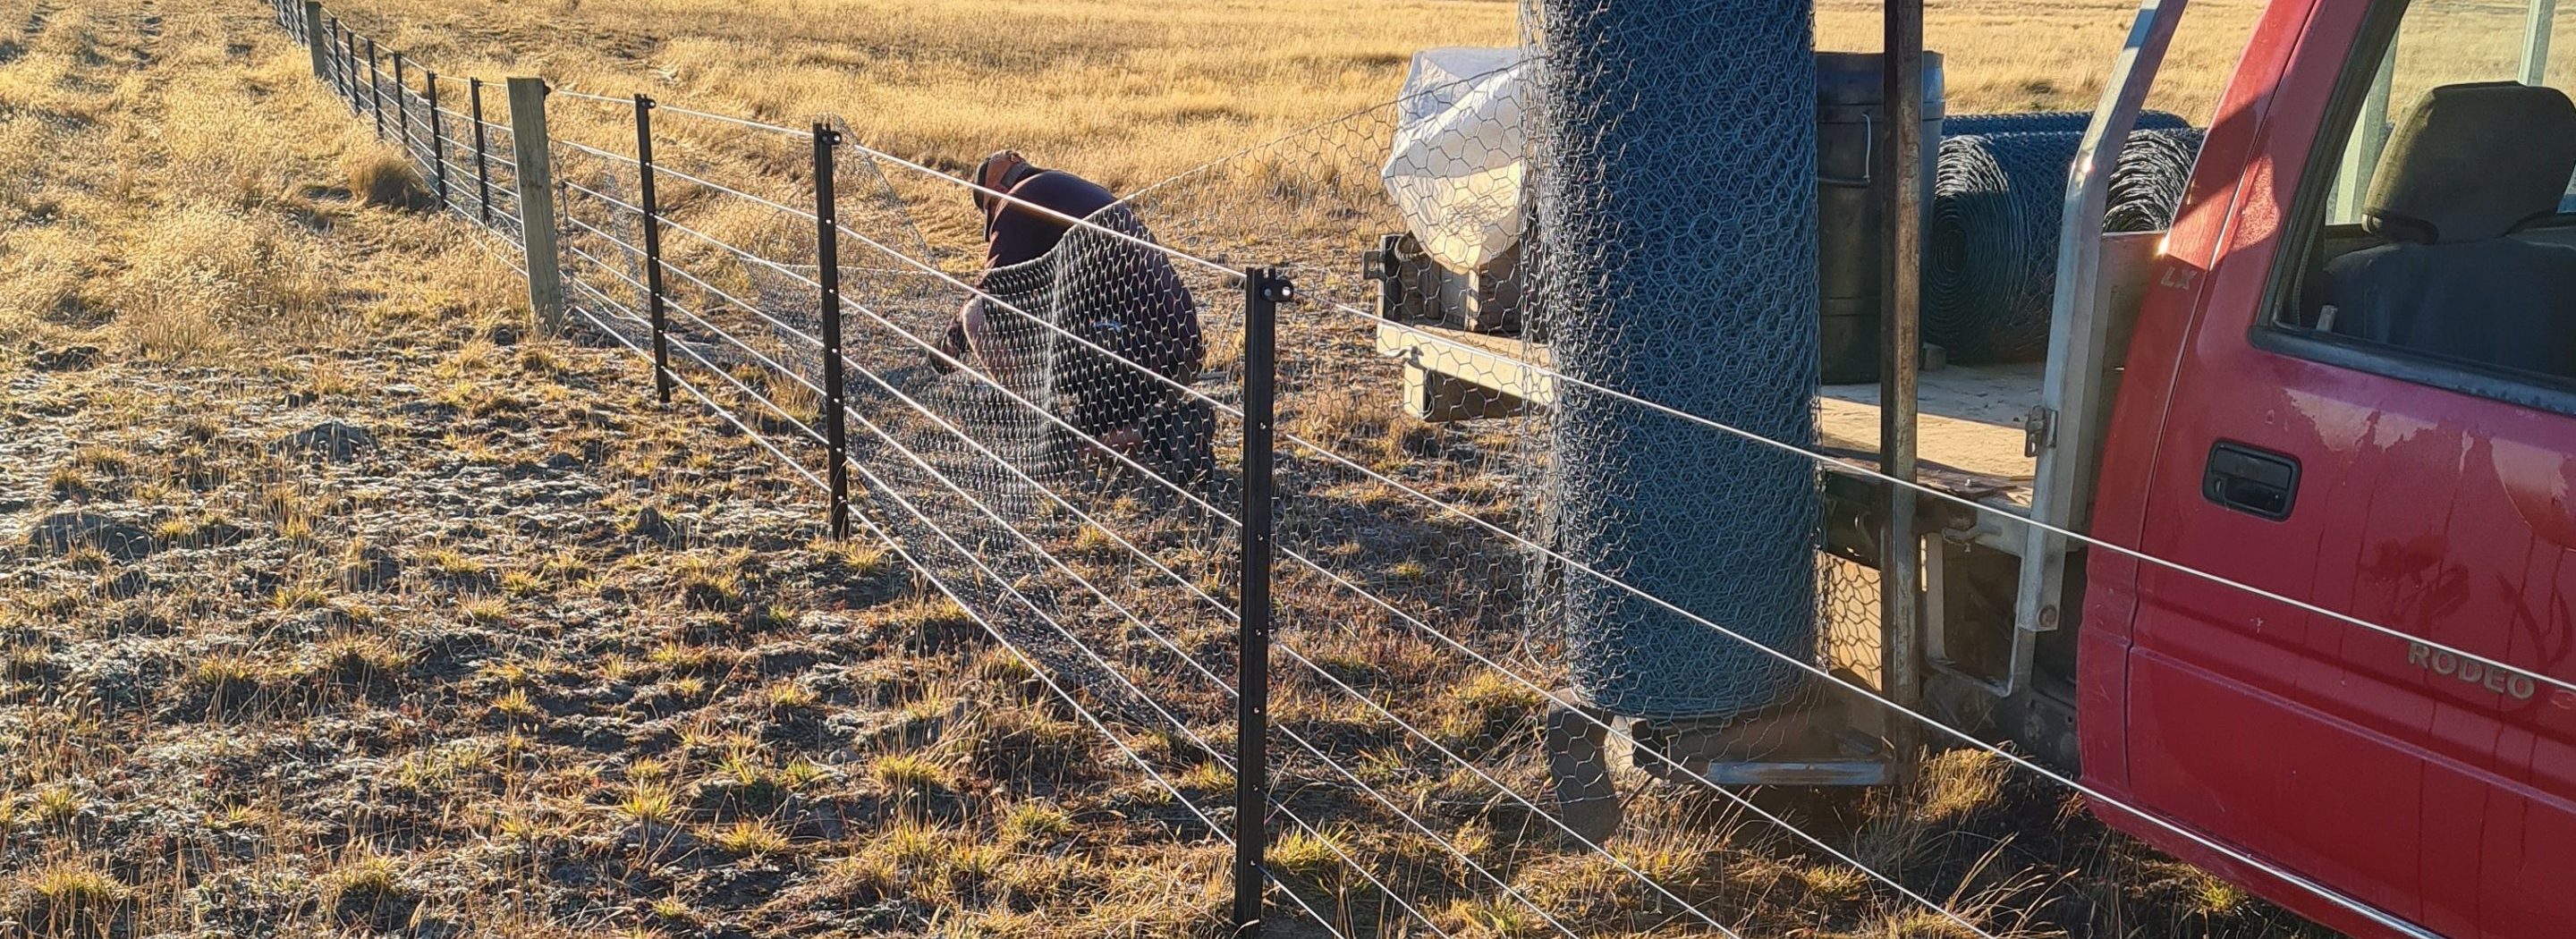 Monk Fencing - Simons Pass rabbit netting fence